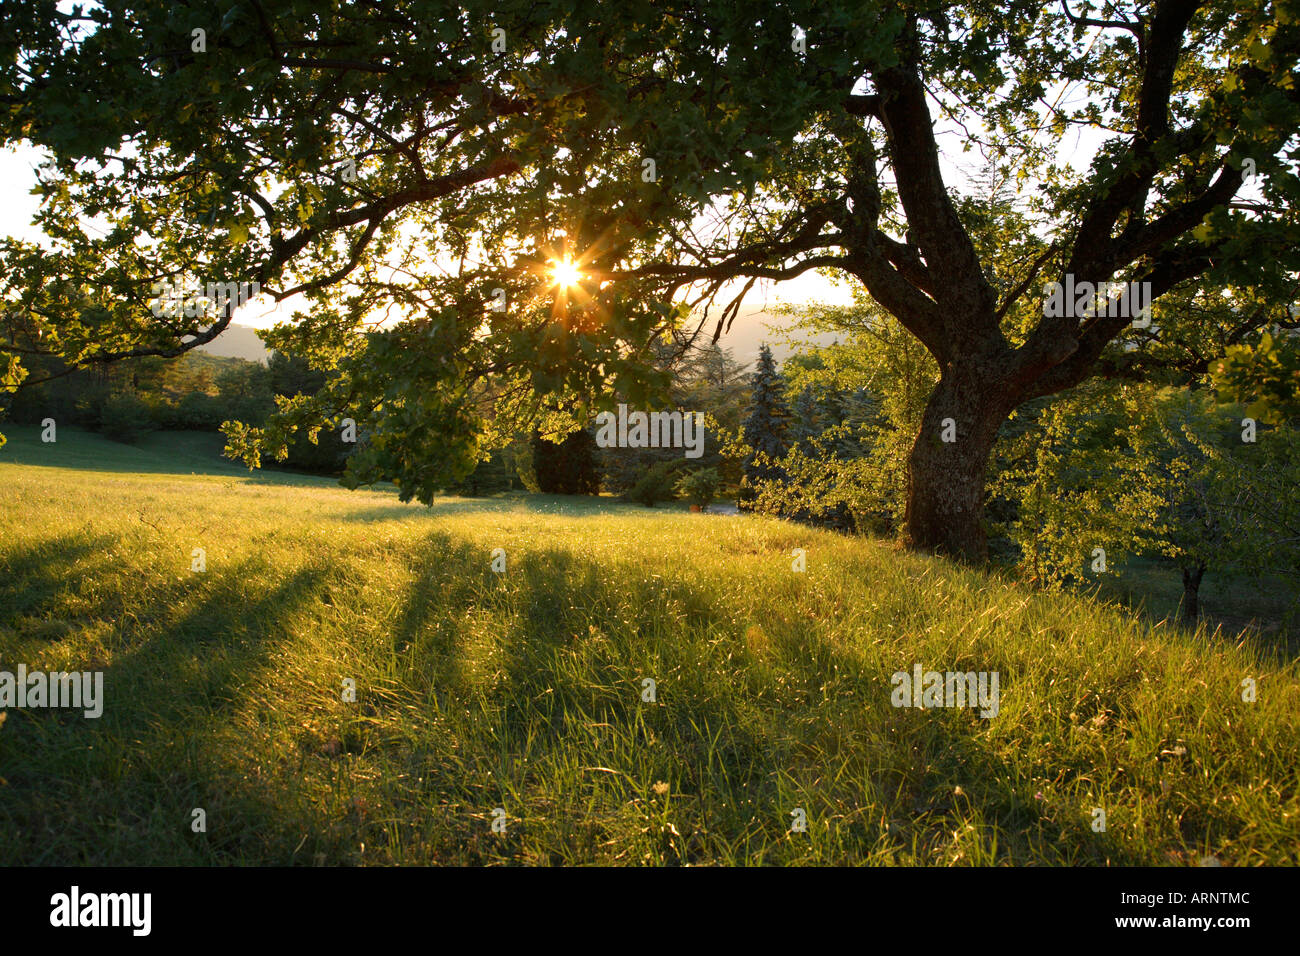 Evening sun shining through branches of an oak tree Stock Photo